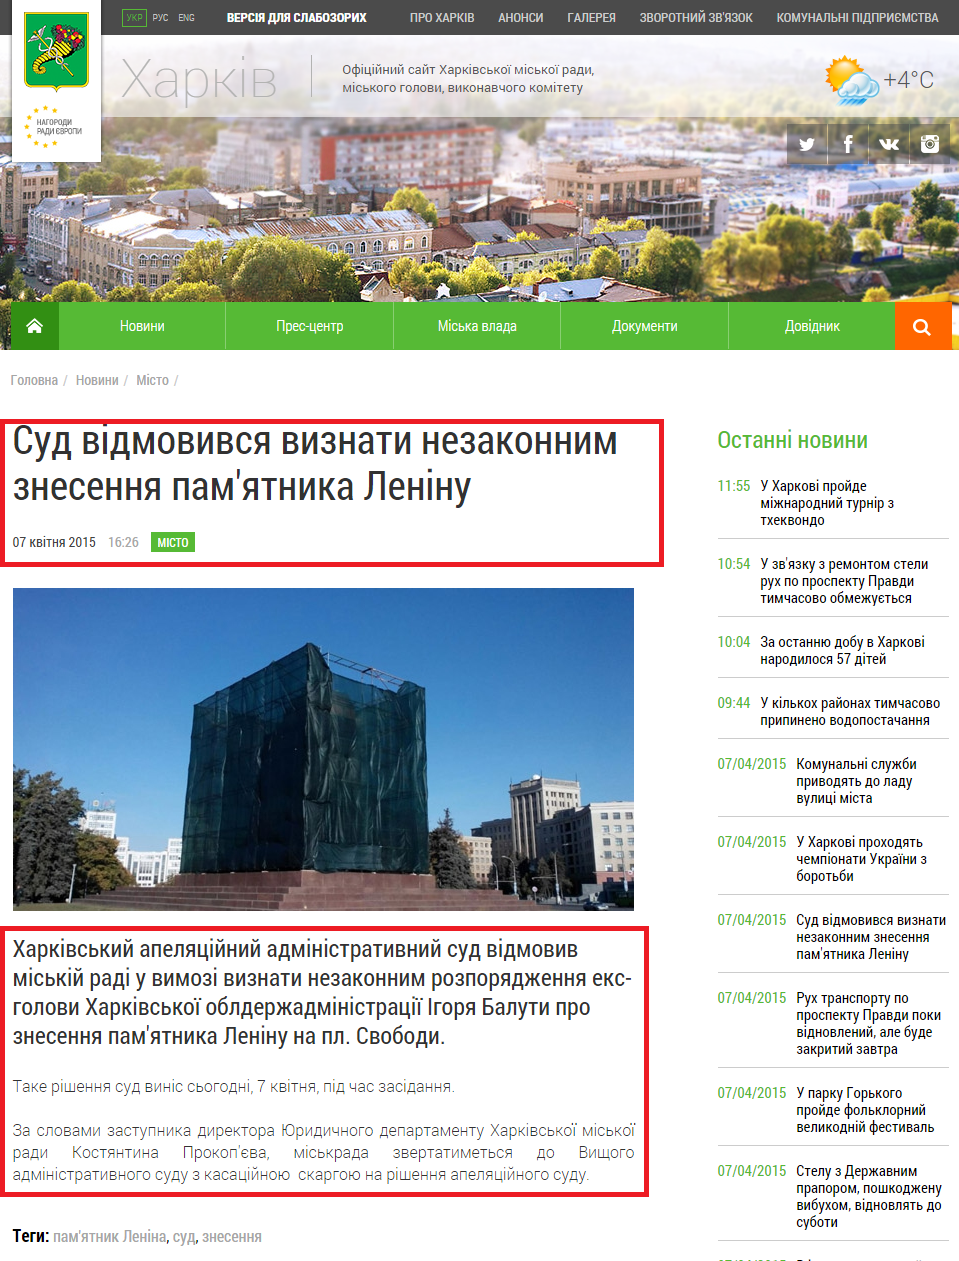 http://www.city.kharkov.ua/uk/news/sud-vidmovivsya-viznati-nezakonnim-znesennya-pamyatnika-leninu-27544.html